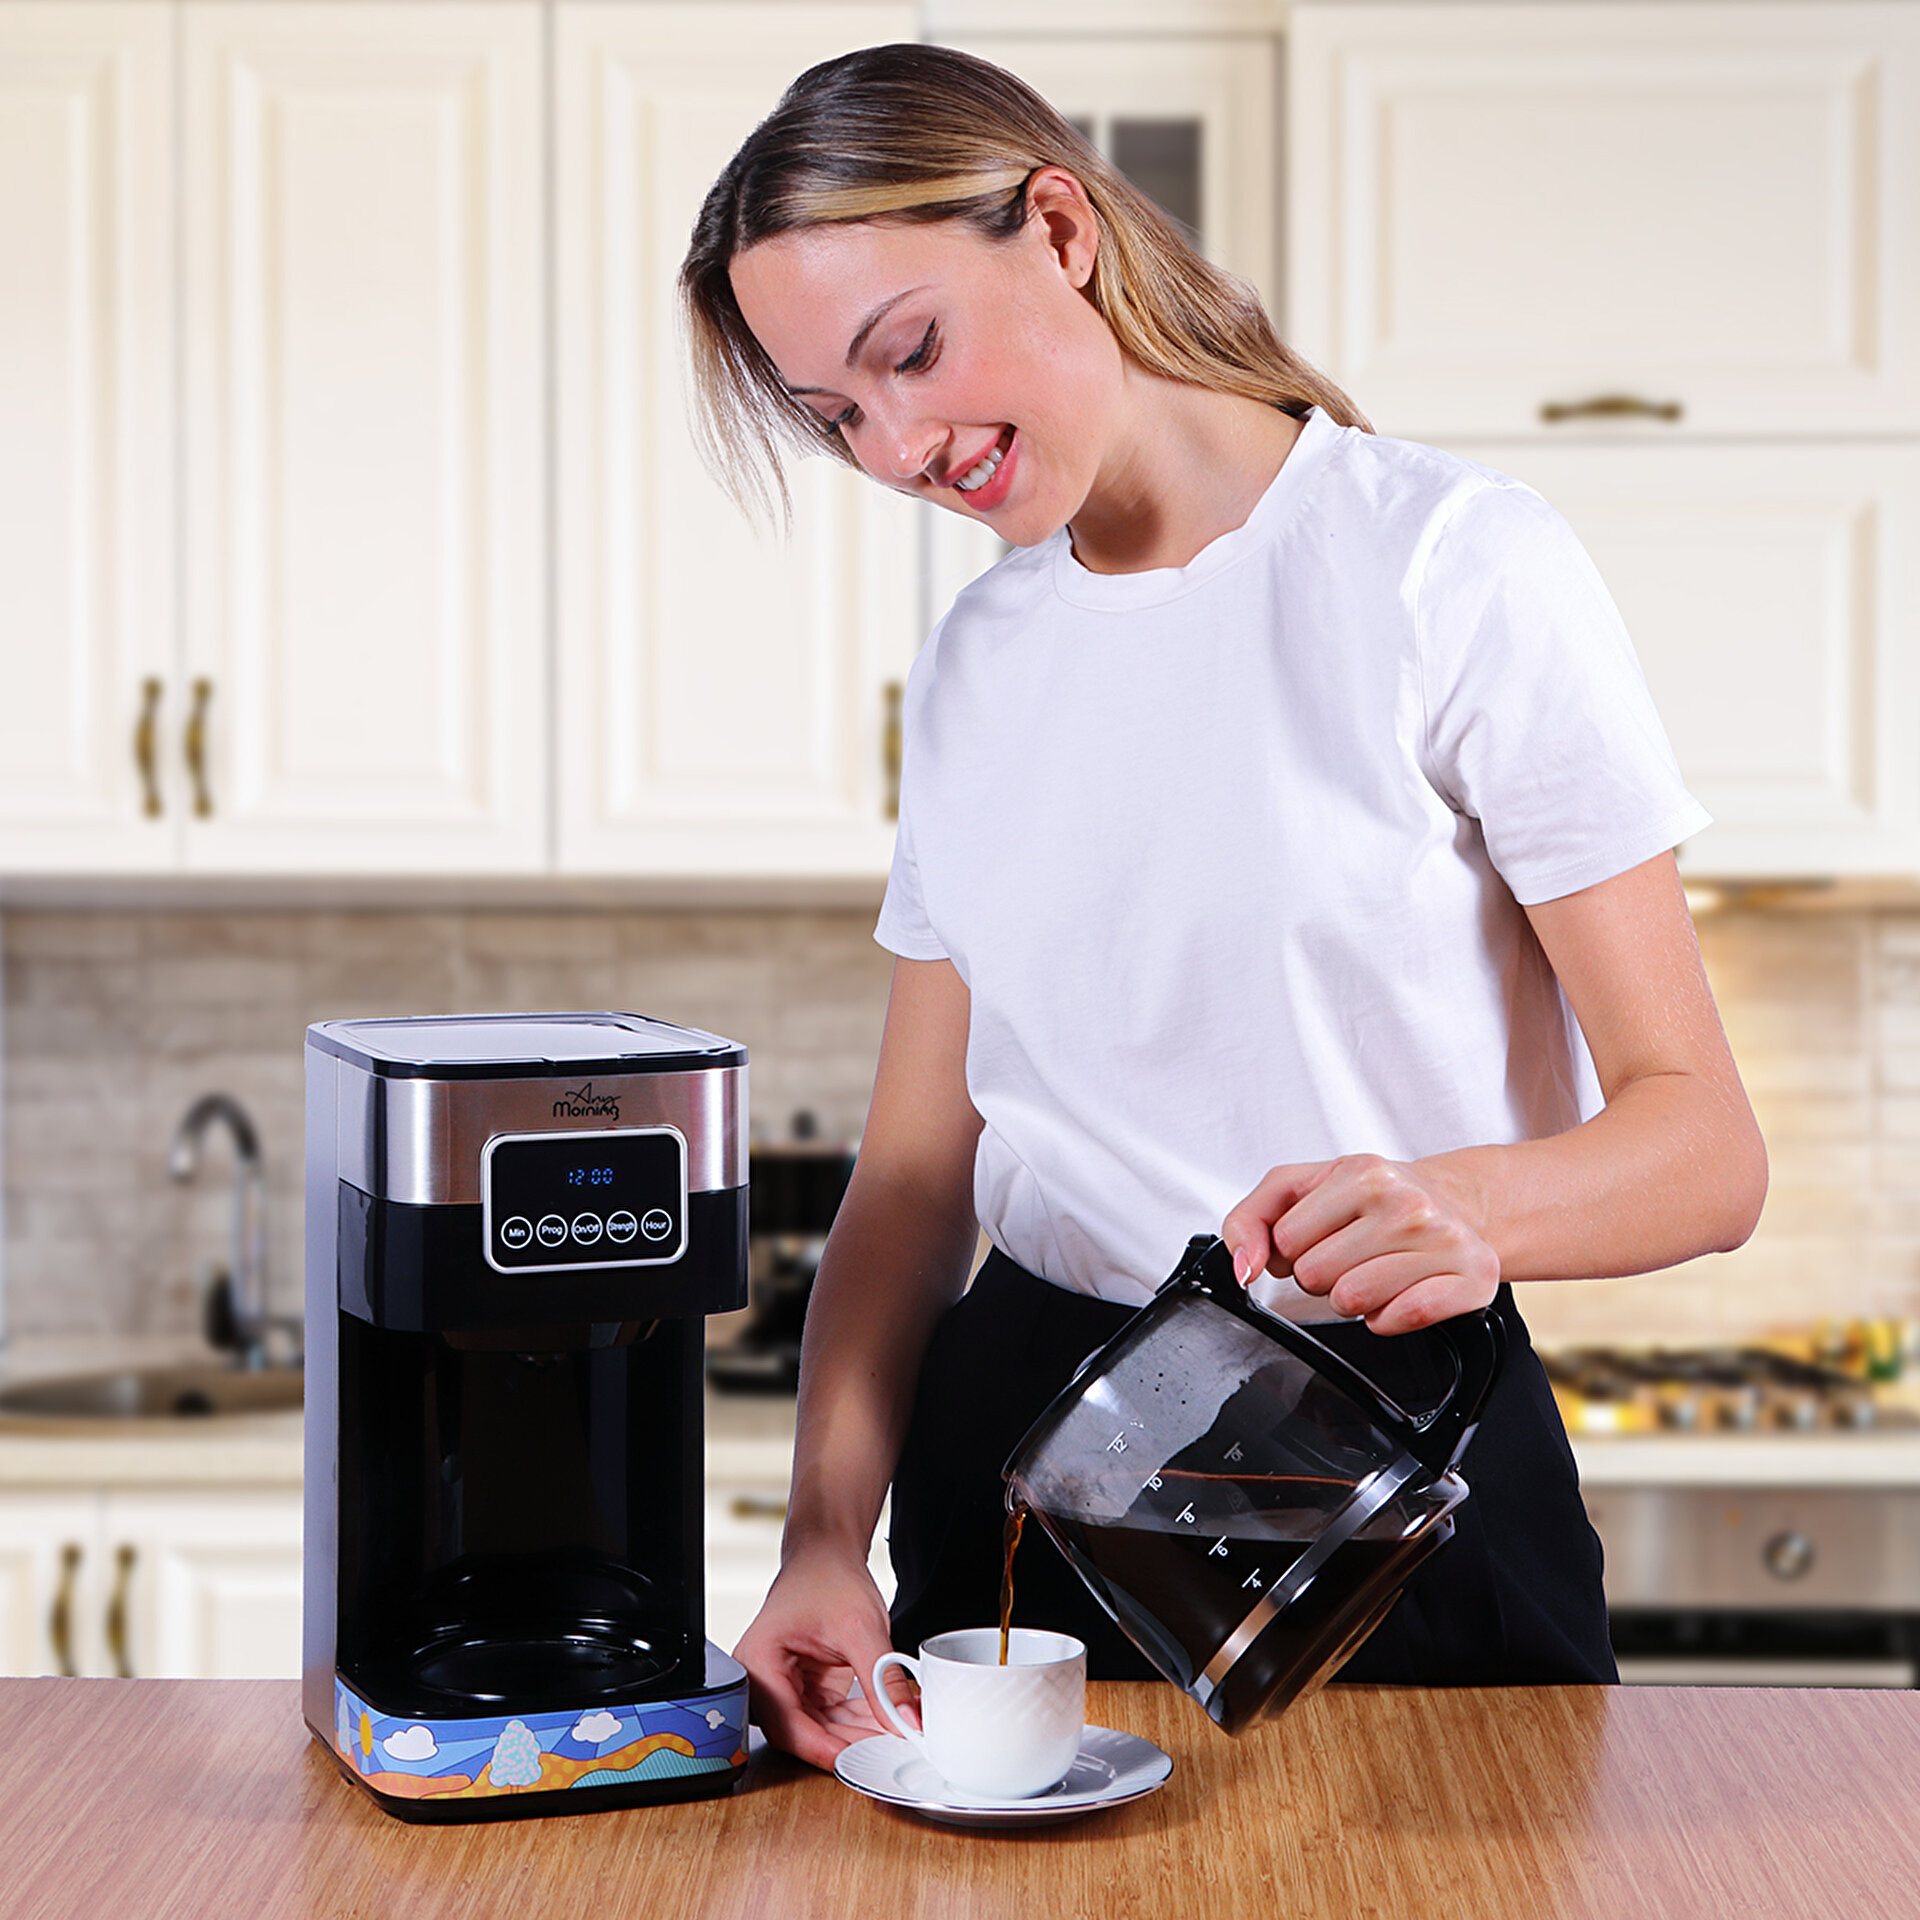 Smart coffee maker SkyCoffee M1509S-E. Enjoy your coffee break in one click!